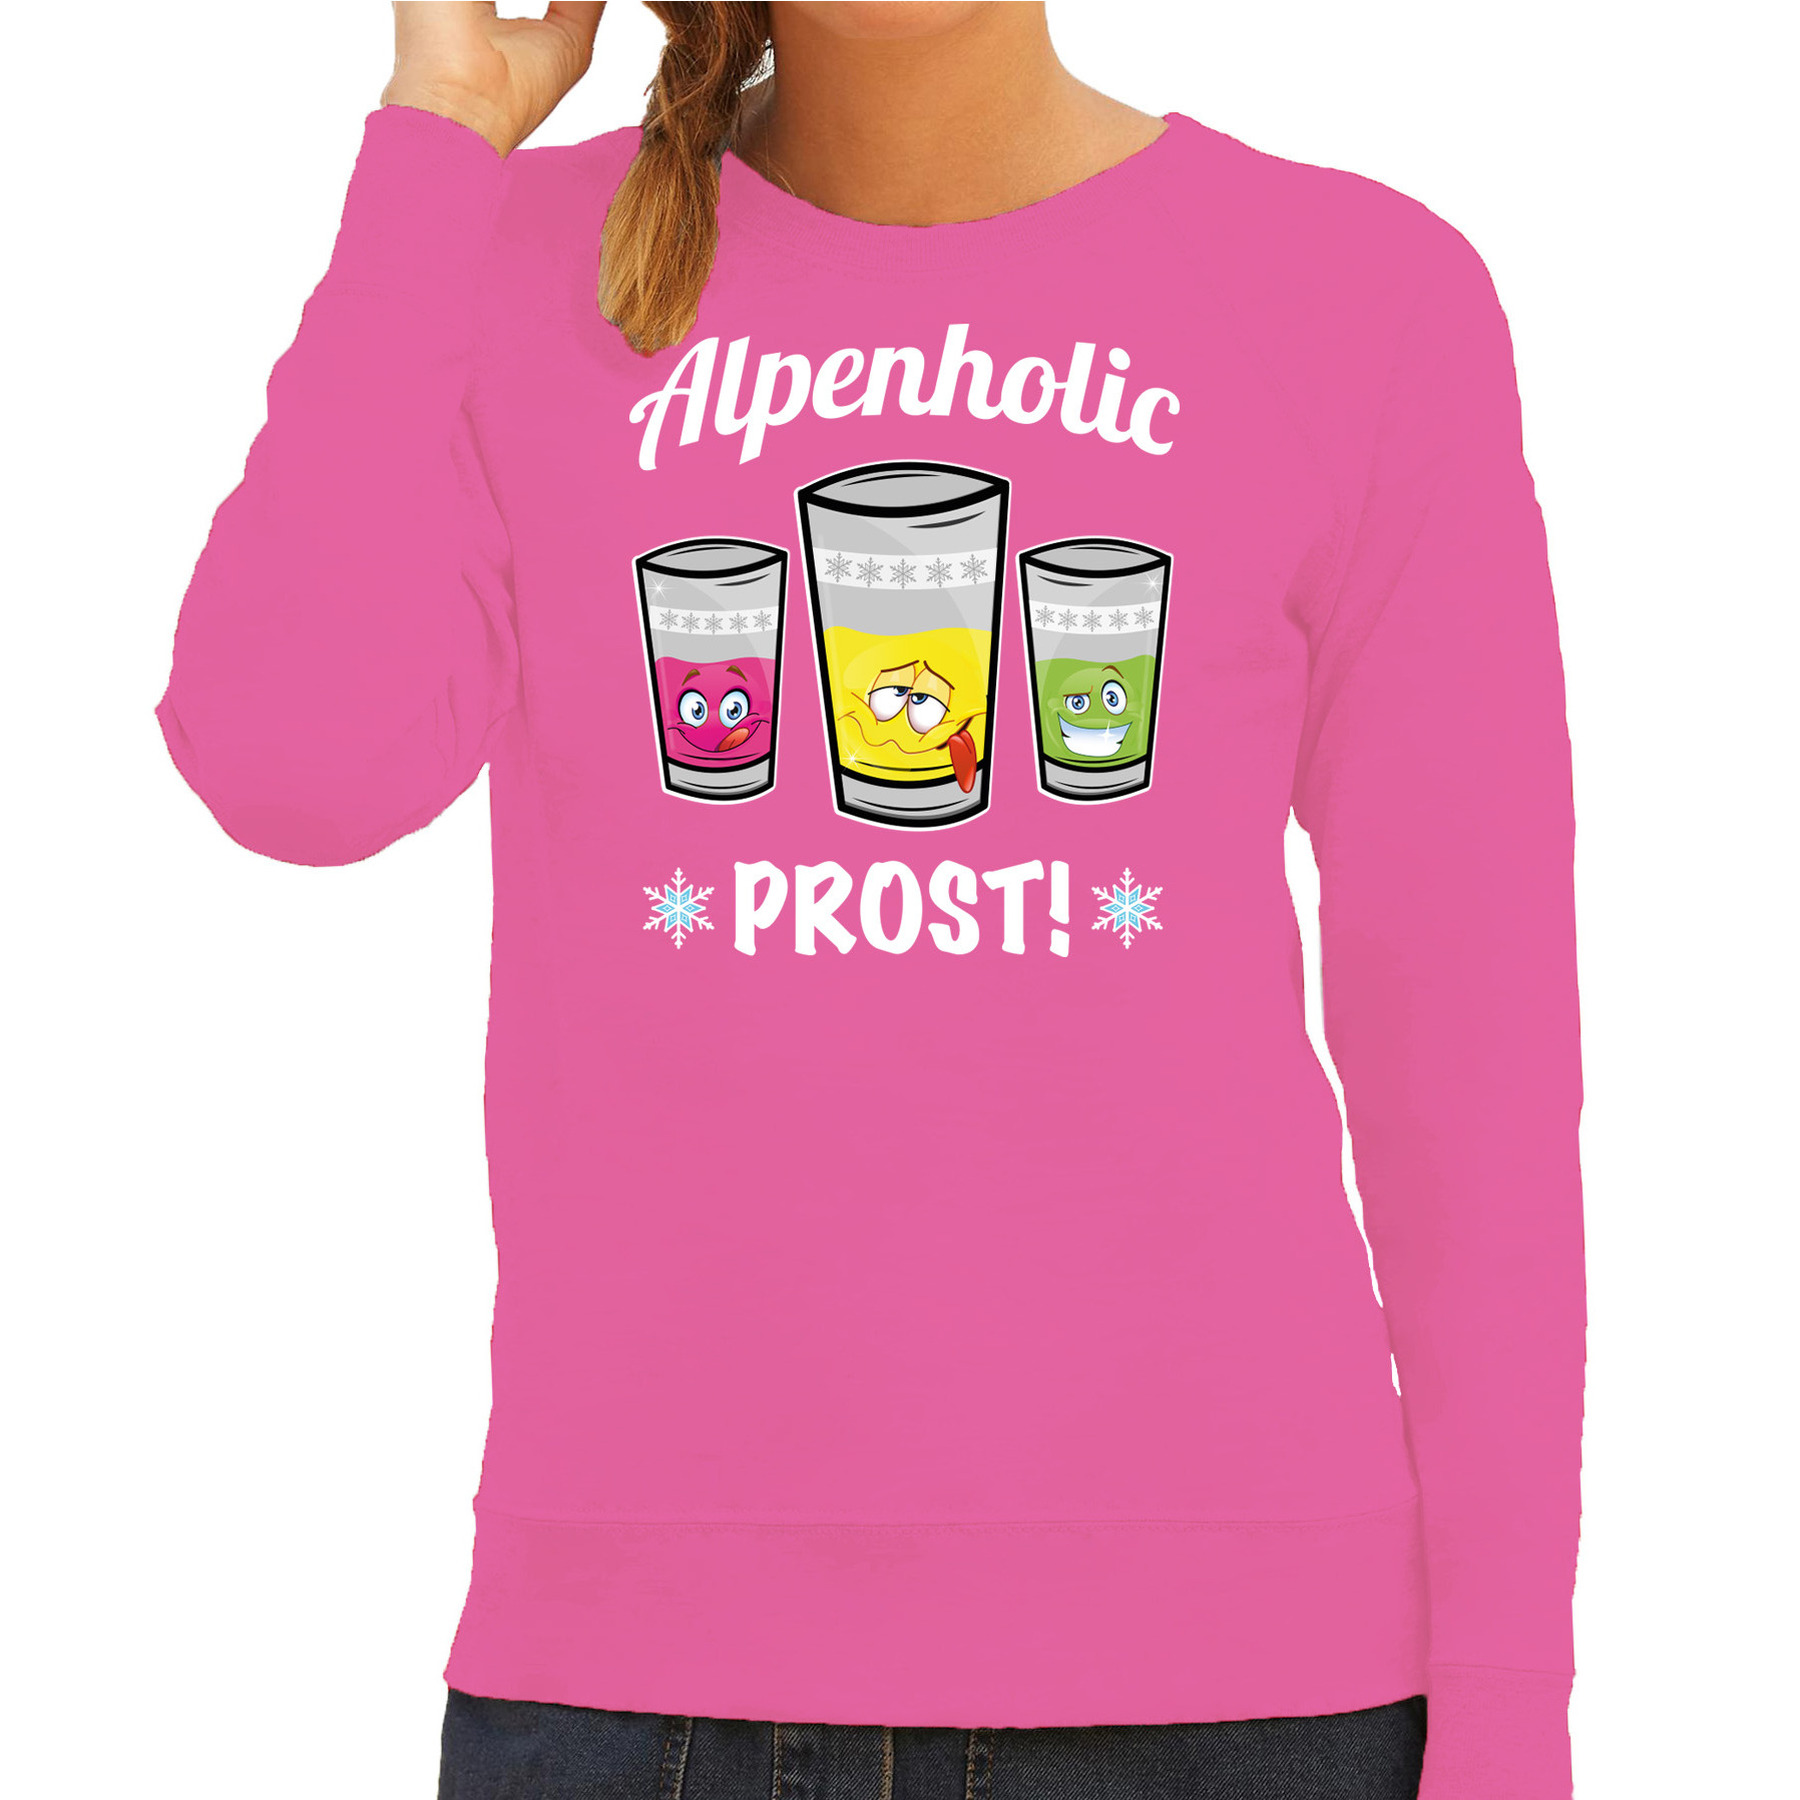 Apres ski sweater voor dames Alpenholic roze wintersport prost-proost skien-snowboarden